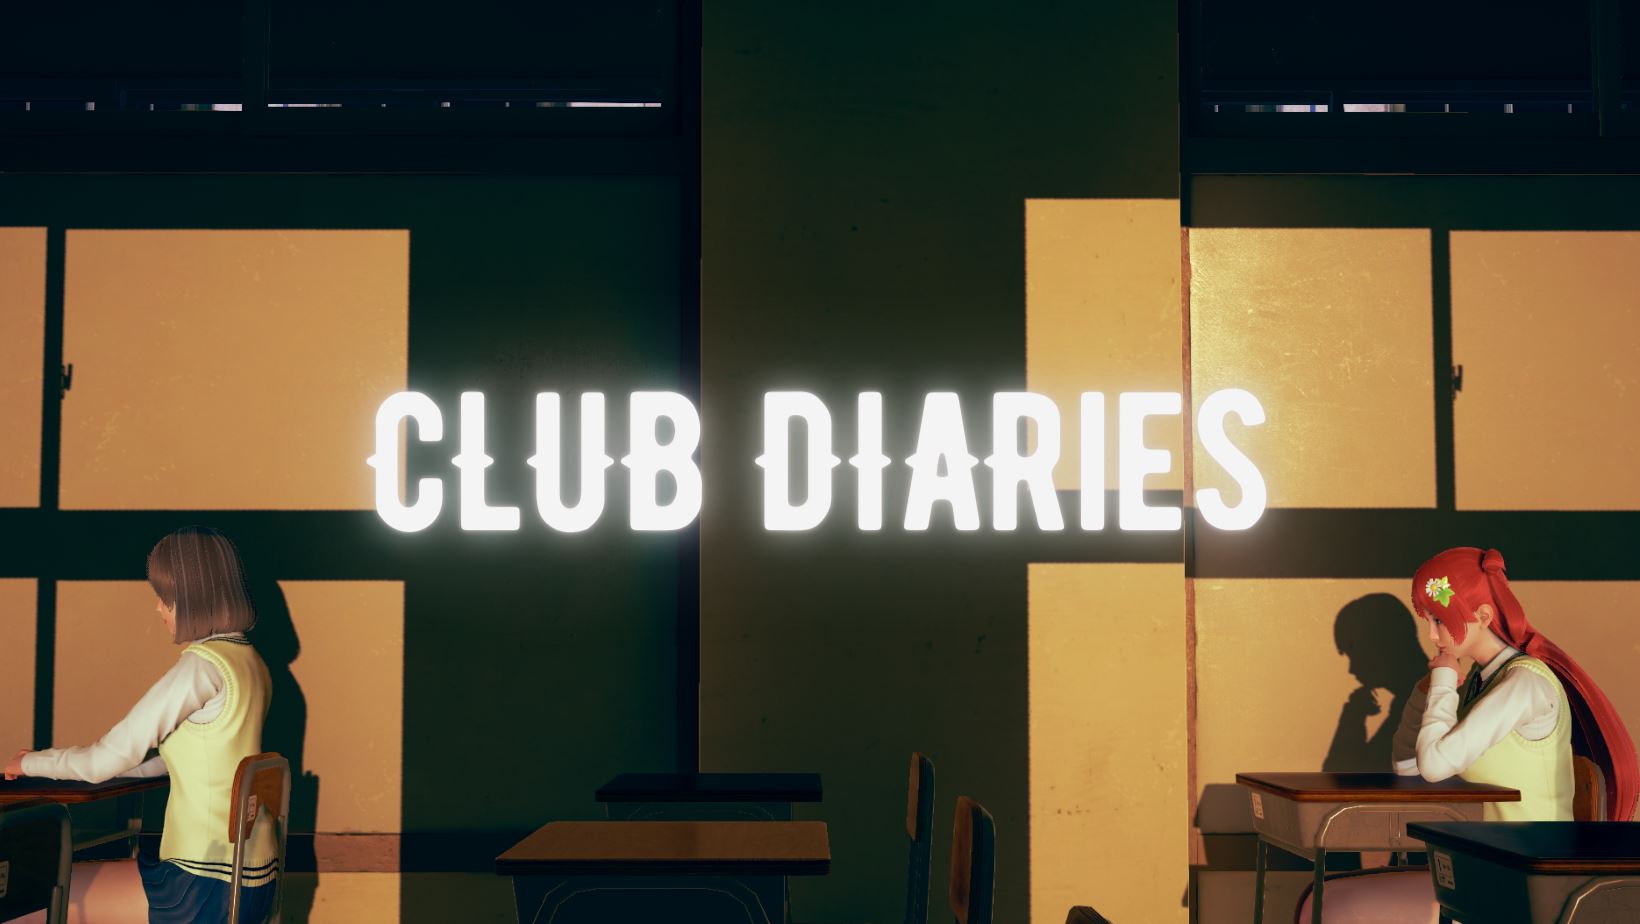 Club Diaries porn xxx game download cover